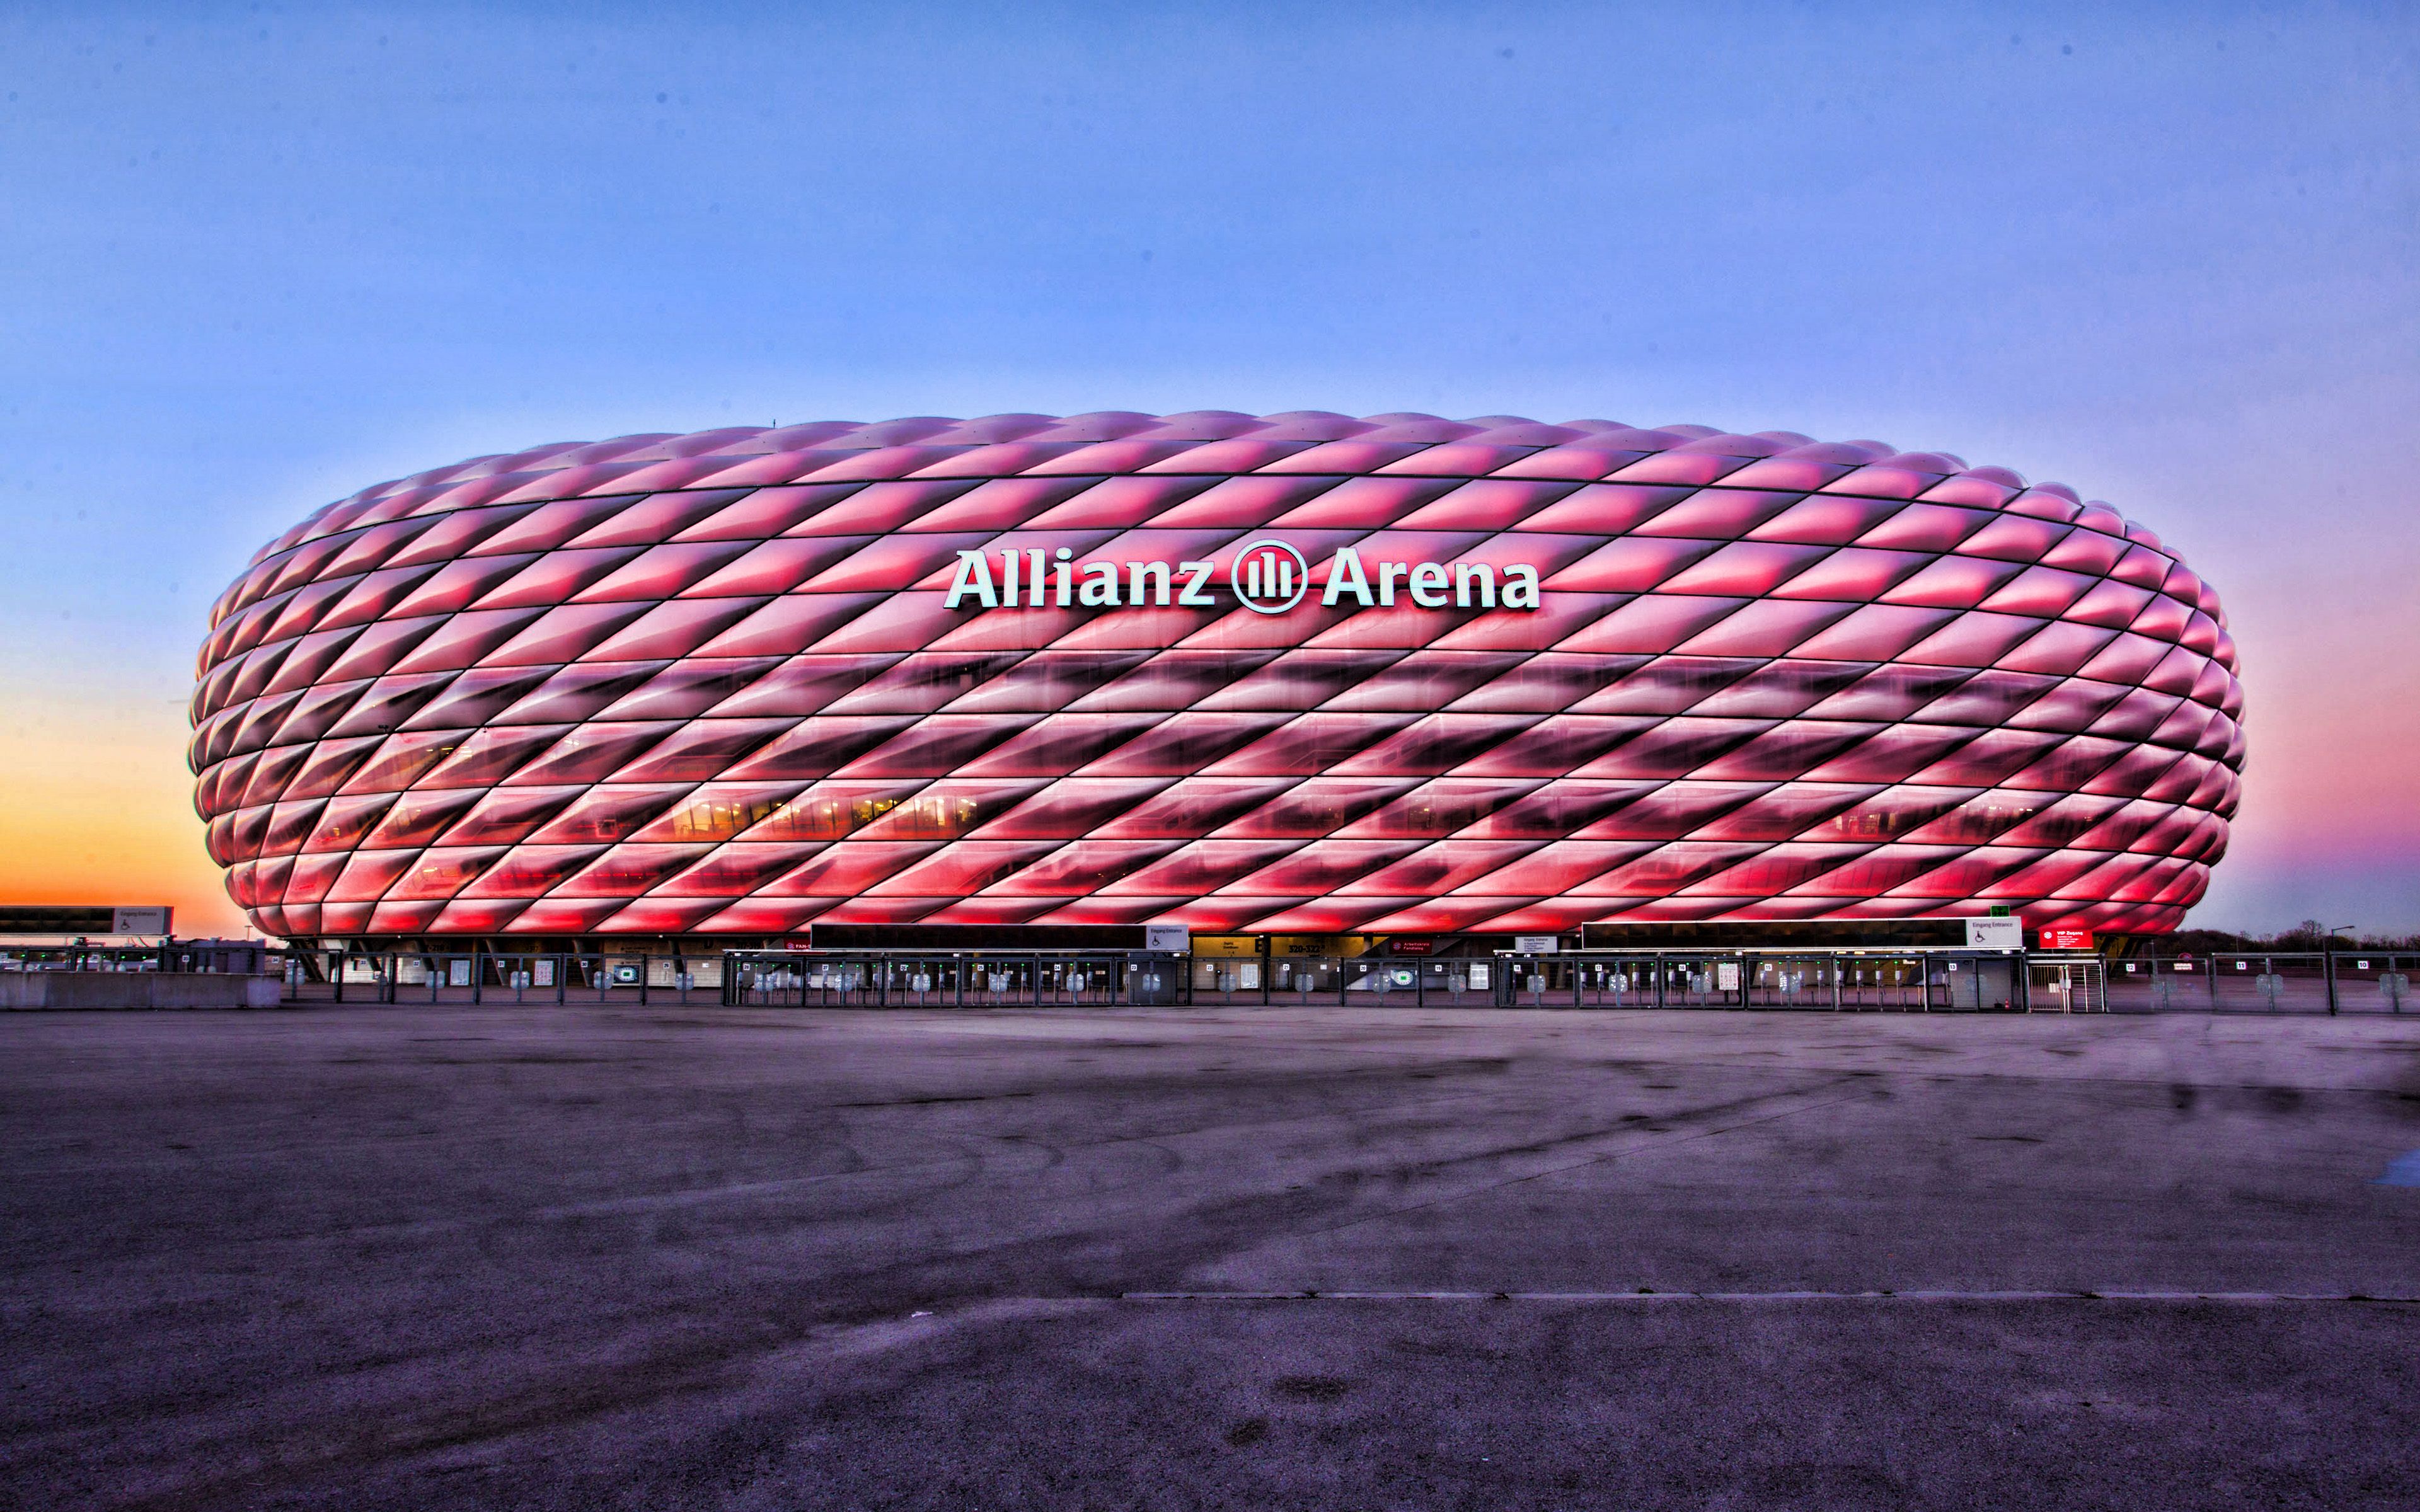 Download wallpaper Bayern Munich Stadium, 4k, pink illumination, Allianz Arena, HDR, soccer, football stadium, Bayern Munich arena, Germany, german stadiums for desktop with resolution 3840x2400. High Quality HD picture wallpaper